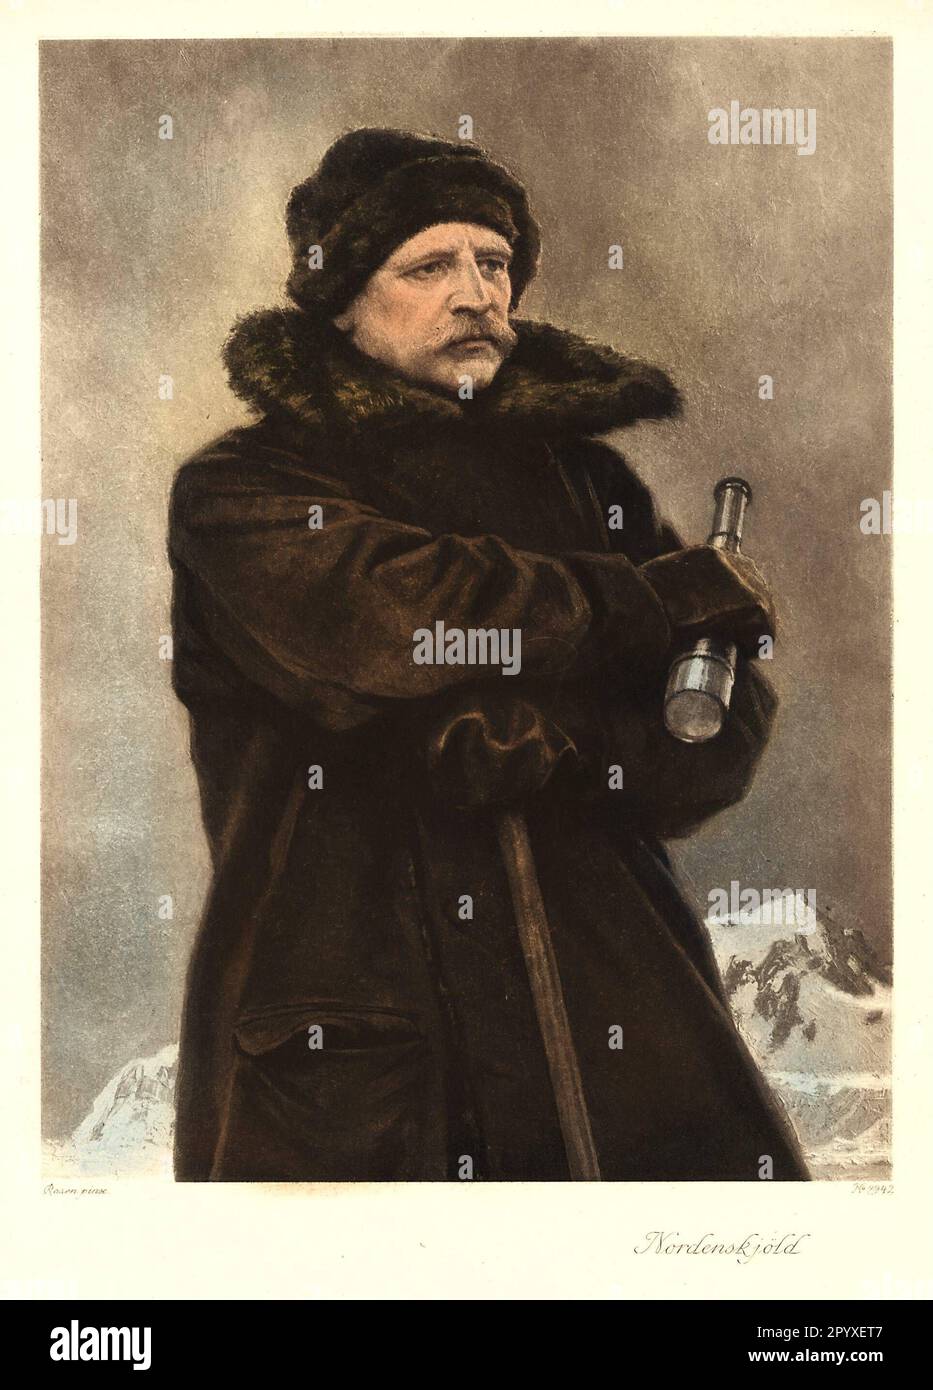 Adolf Erik Freiherr von (since 1880) Nordenskiöld (1832-1901), Swedish polar explorer. Painting by Rosen. Photo: Heliogravure, Corpus Imaginum, Hanfstaengl Collection. [automated translation] Stock Photo